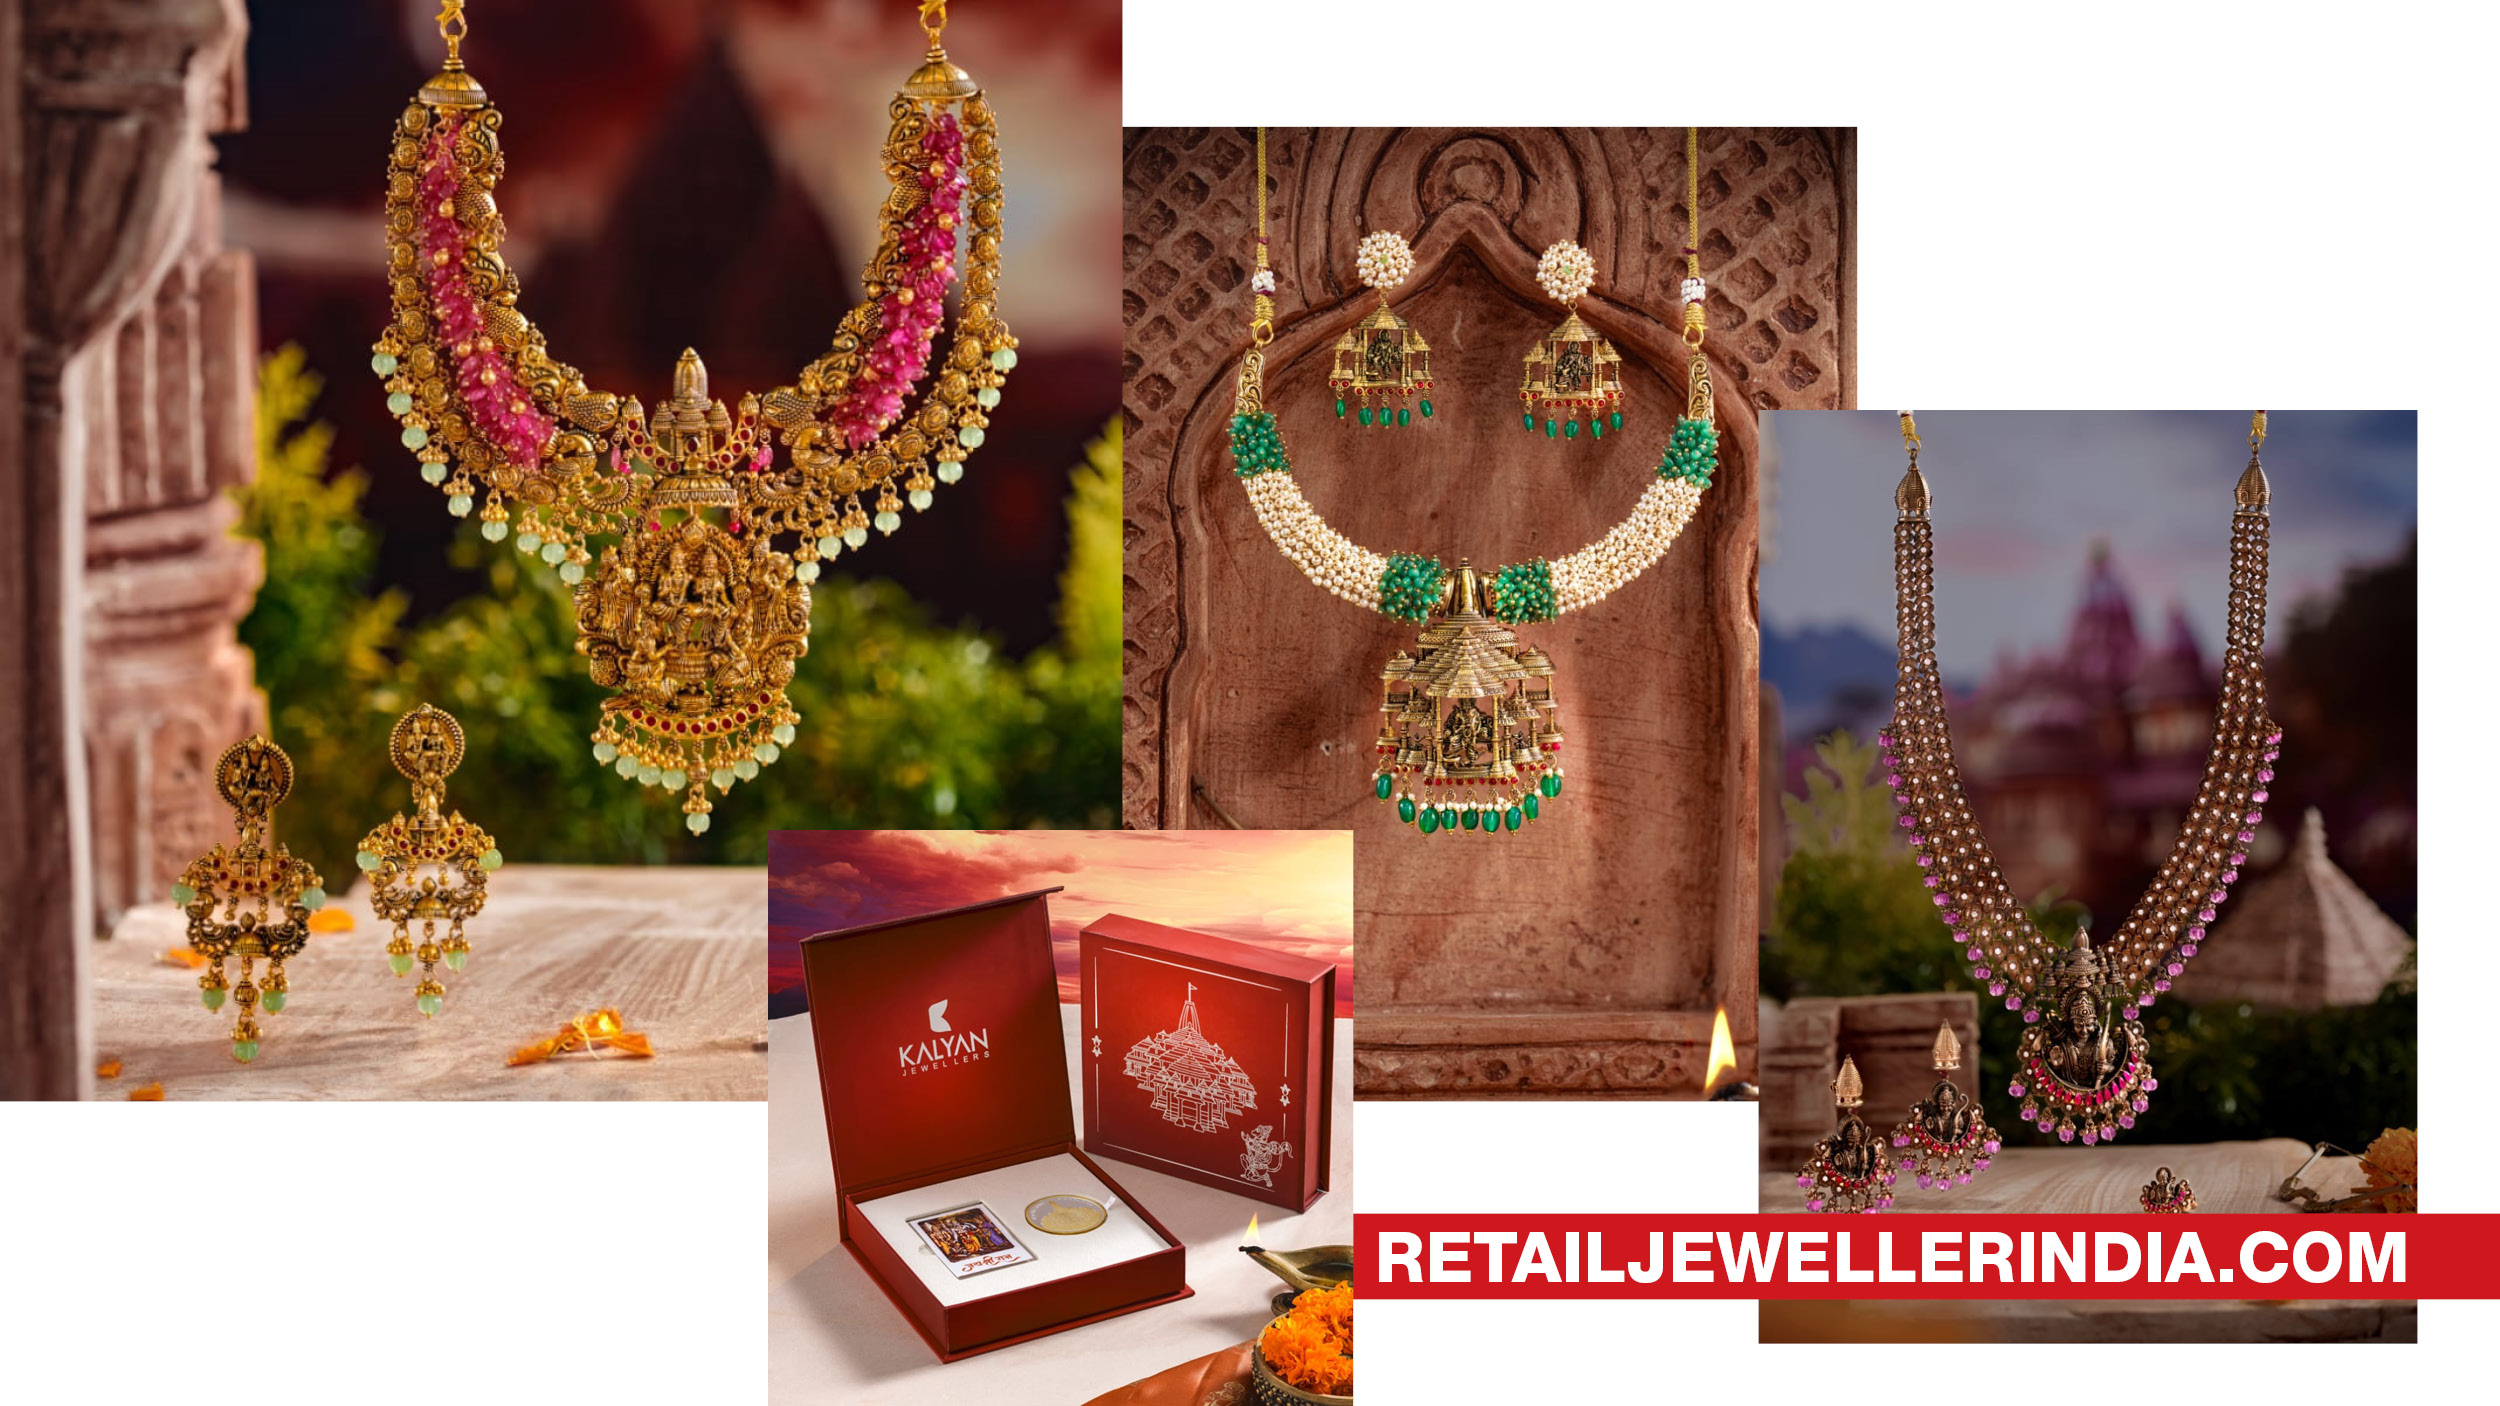 Katrina Kaif to endorse jewellery brand Kalyan Jewellers - Indian Retailer